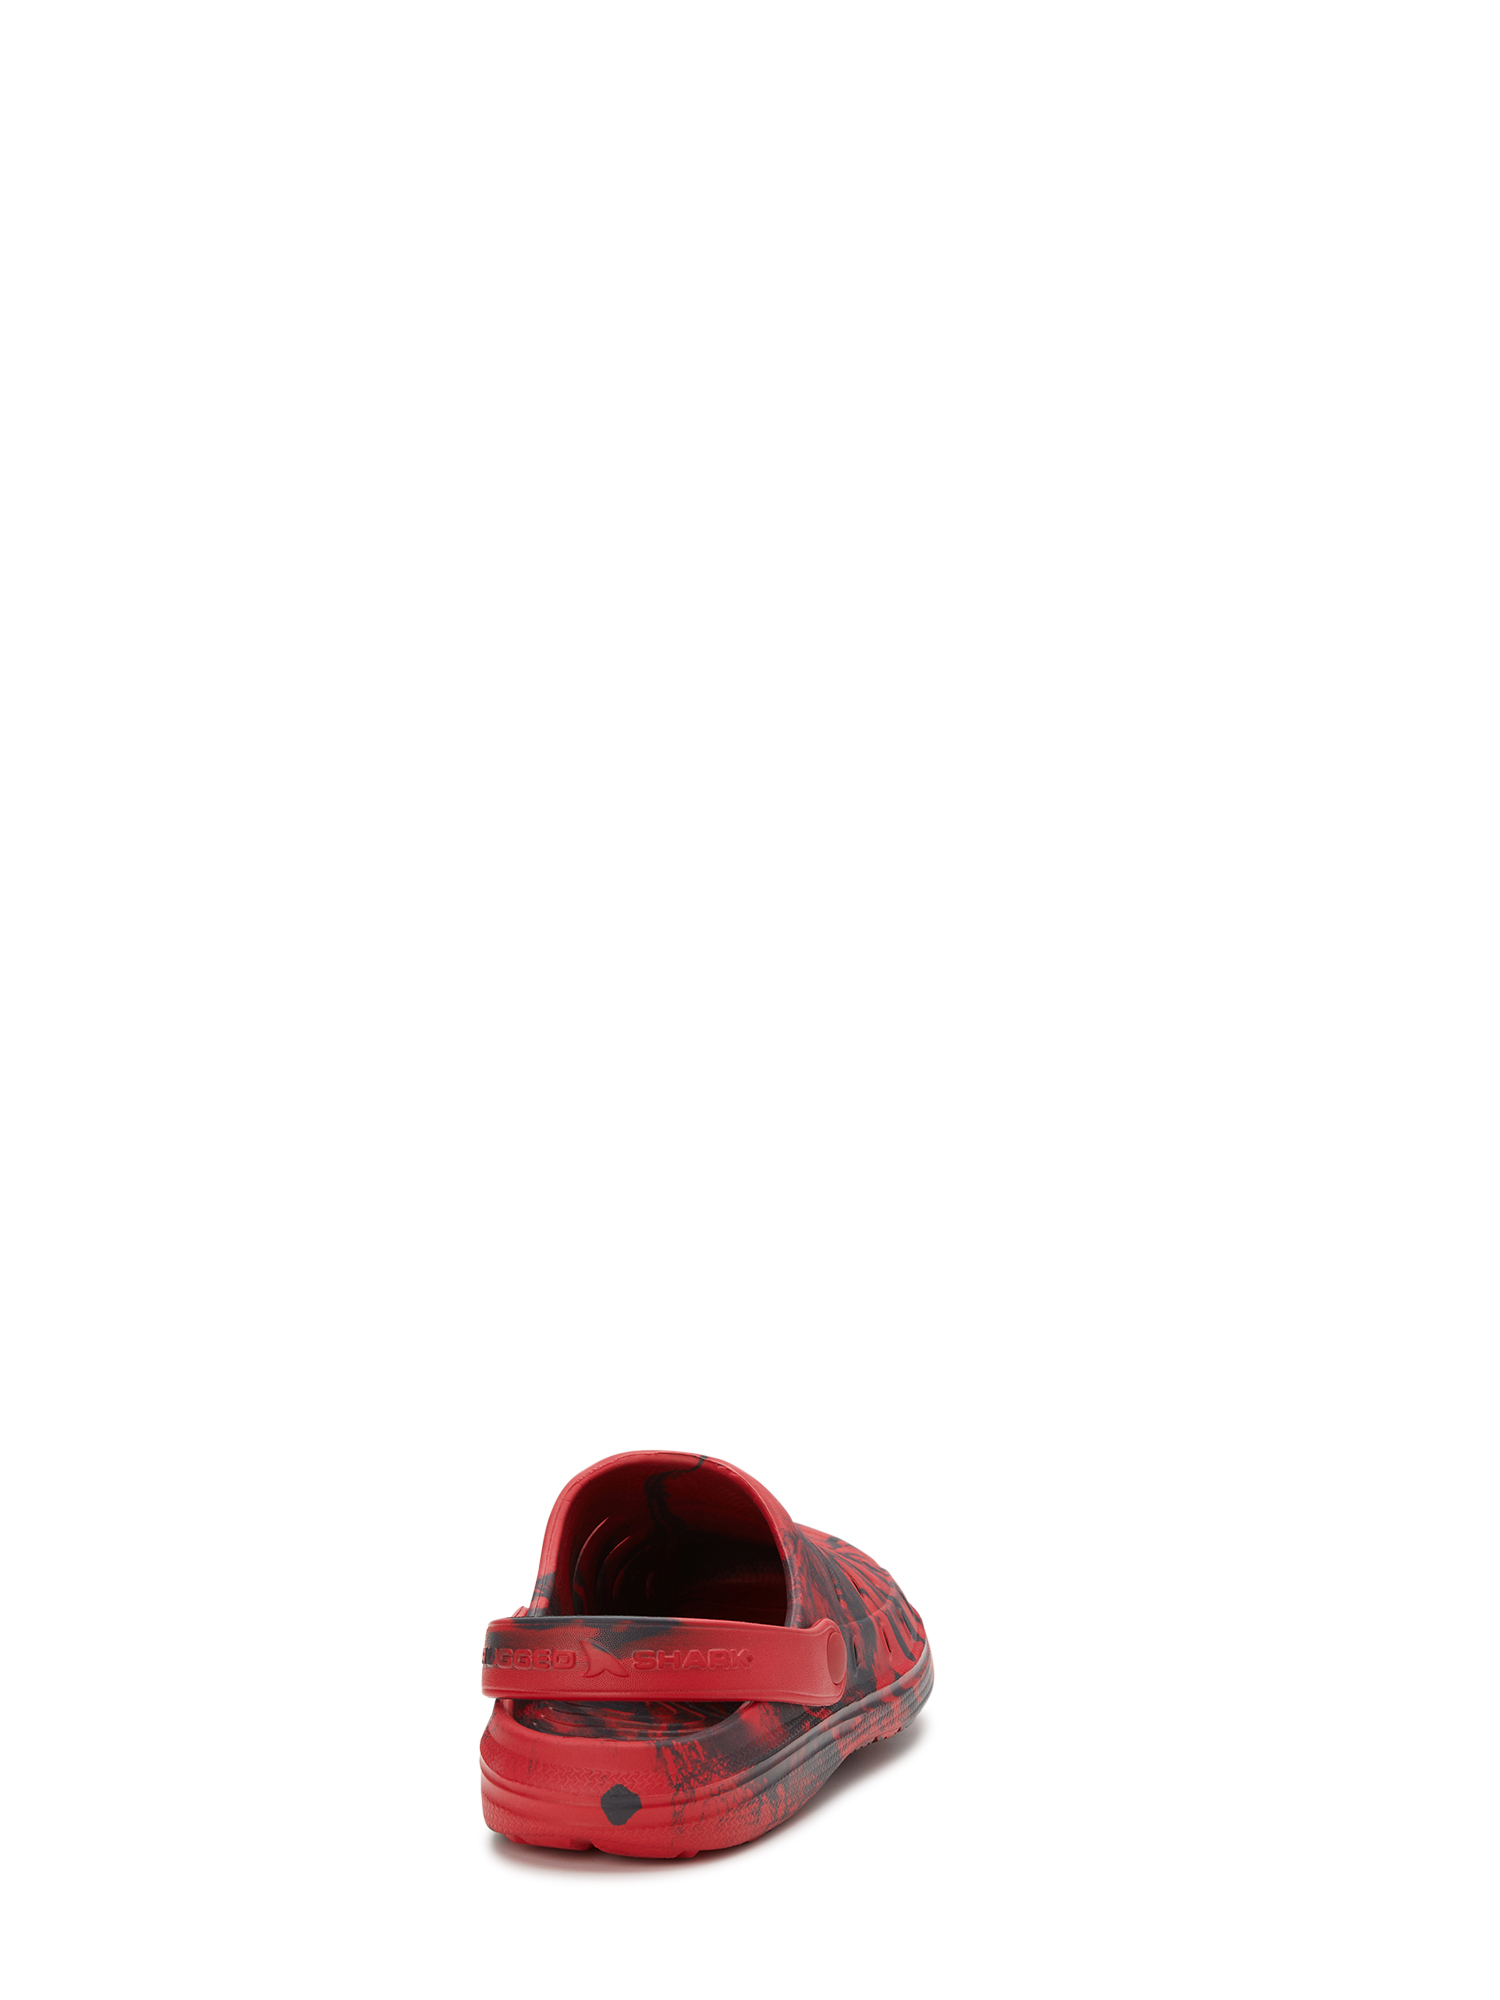 Louis Vuitton] Louis Vuitton Sea Star Beach sandals Rubber red